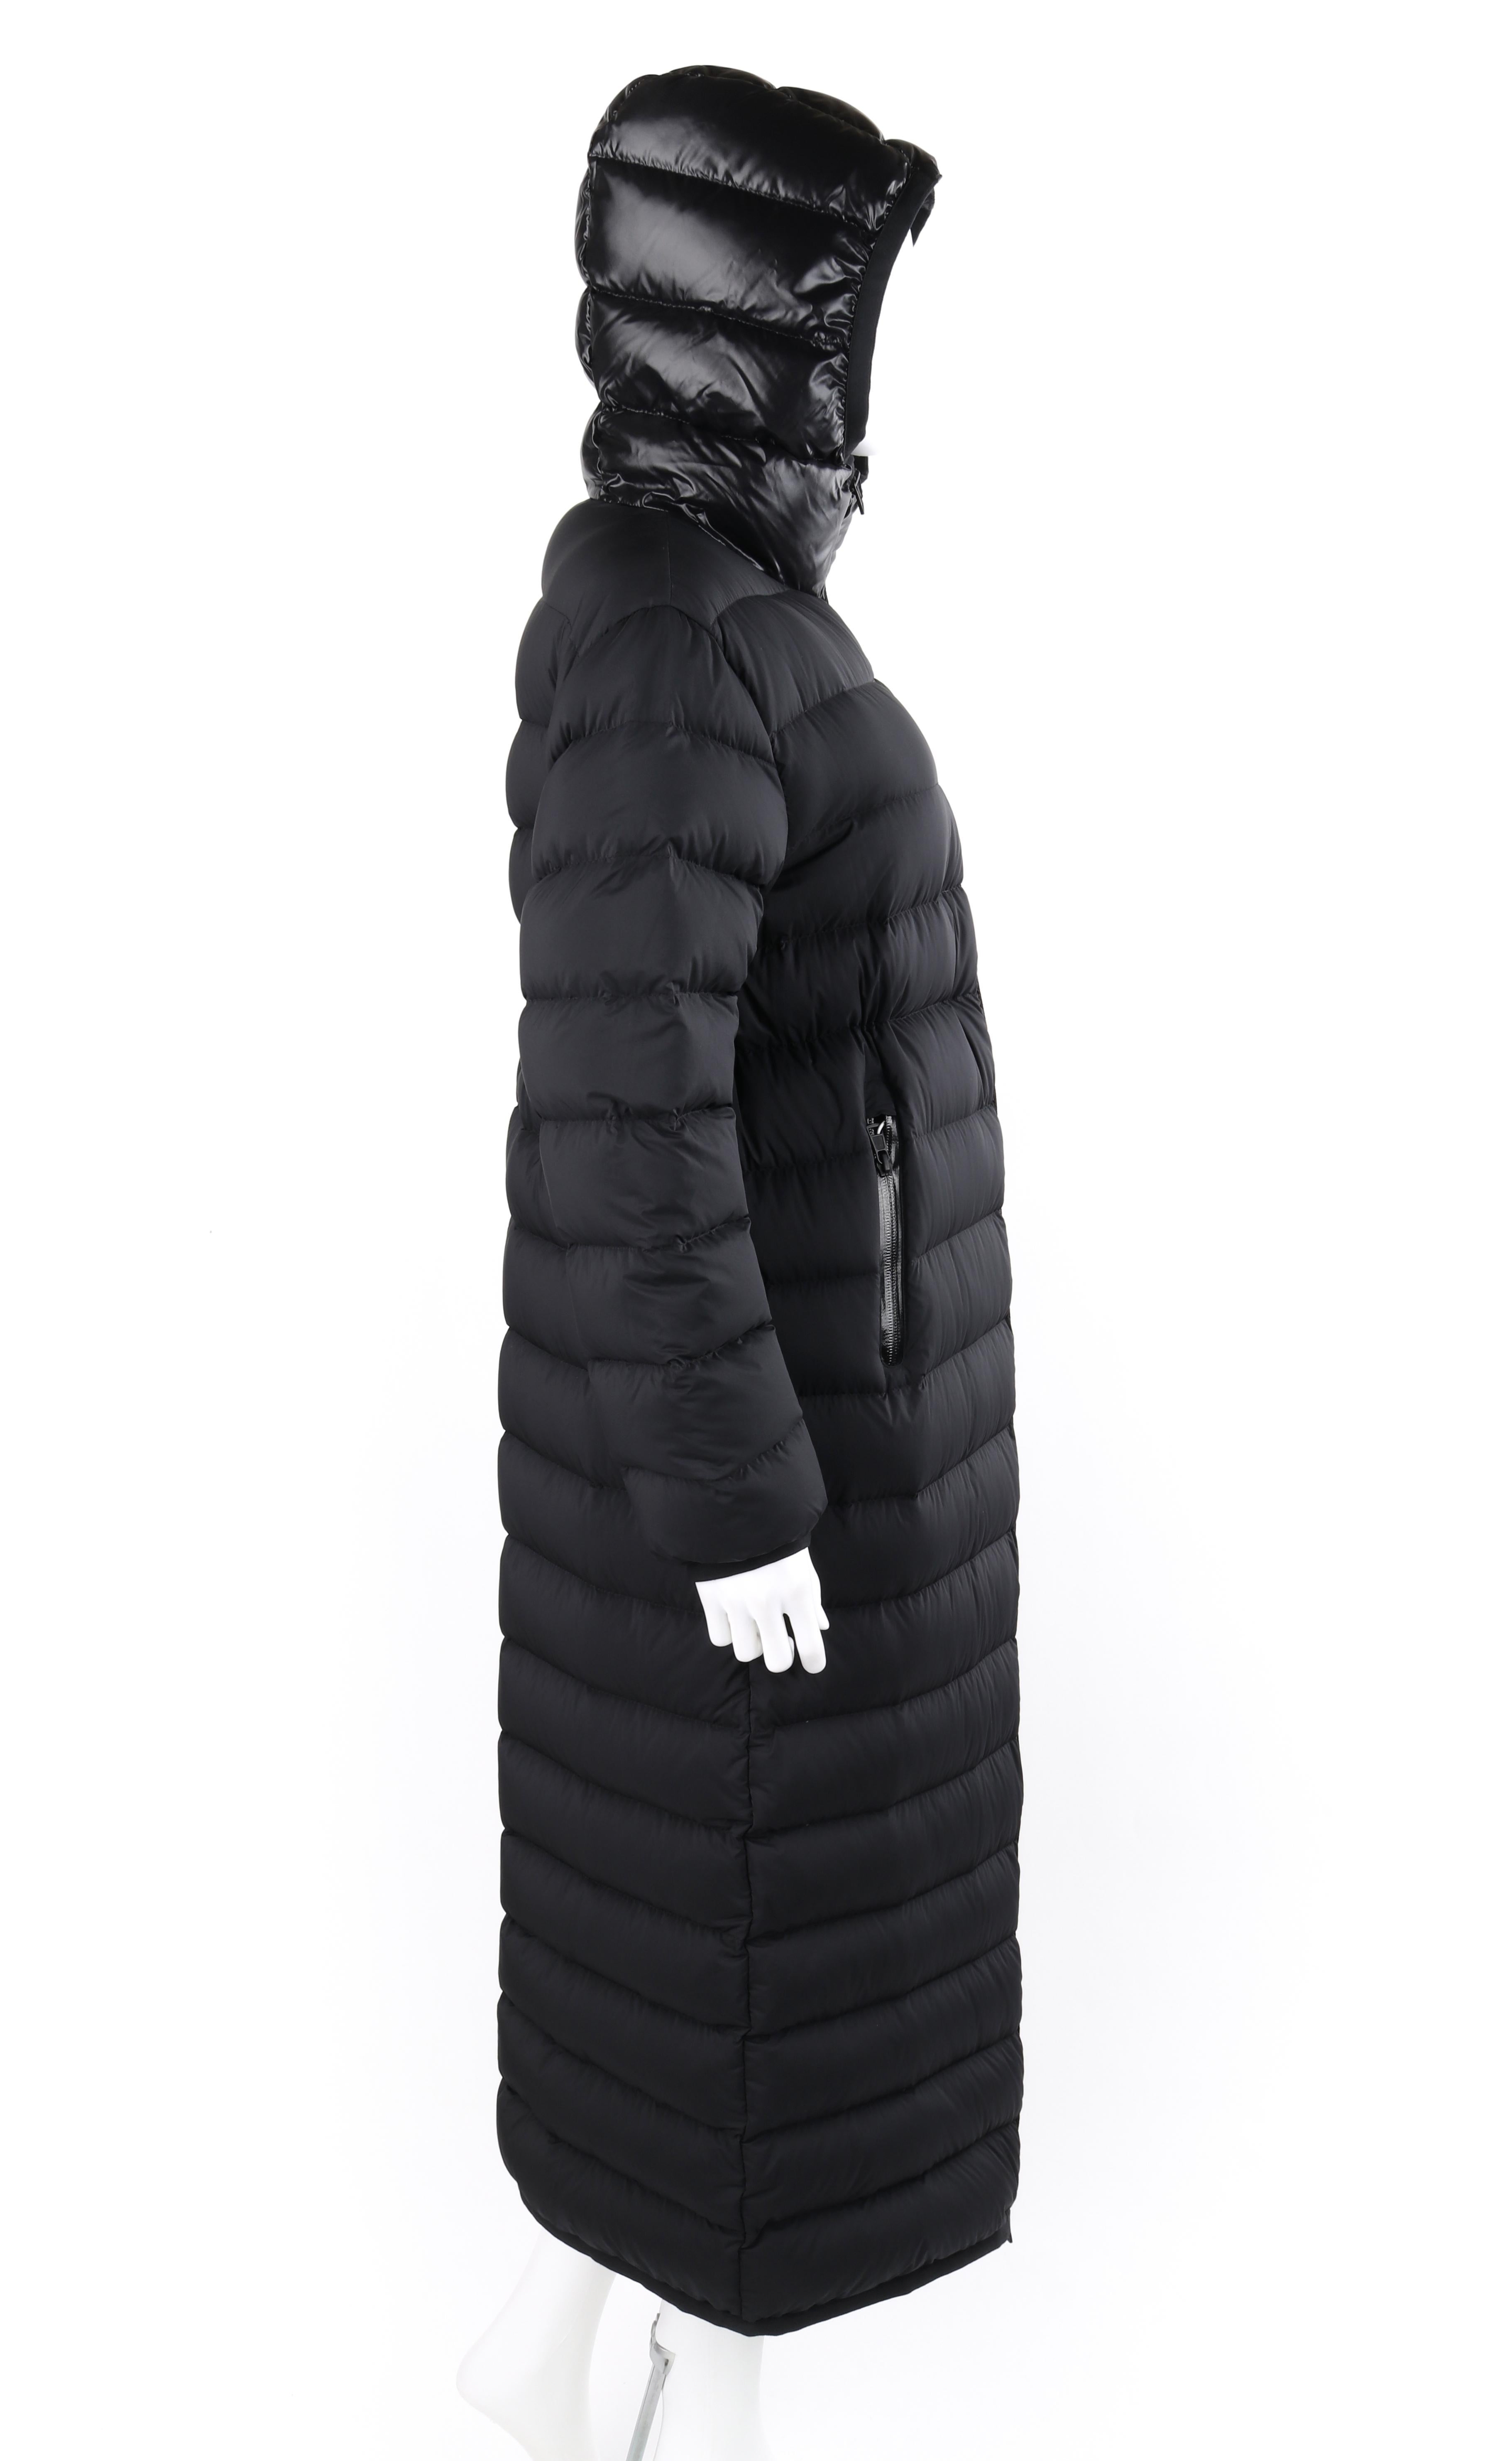 moncler grue coat|OFF 78%| clubseatime.ru